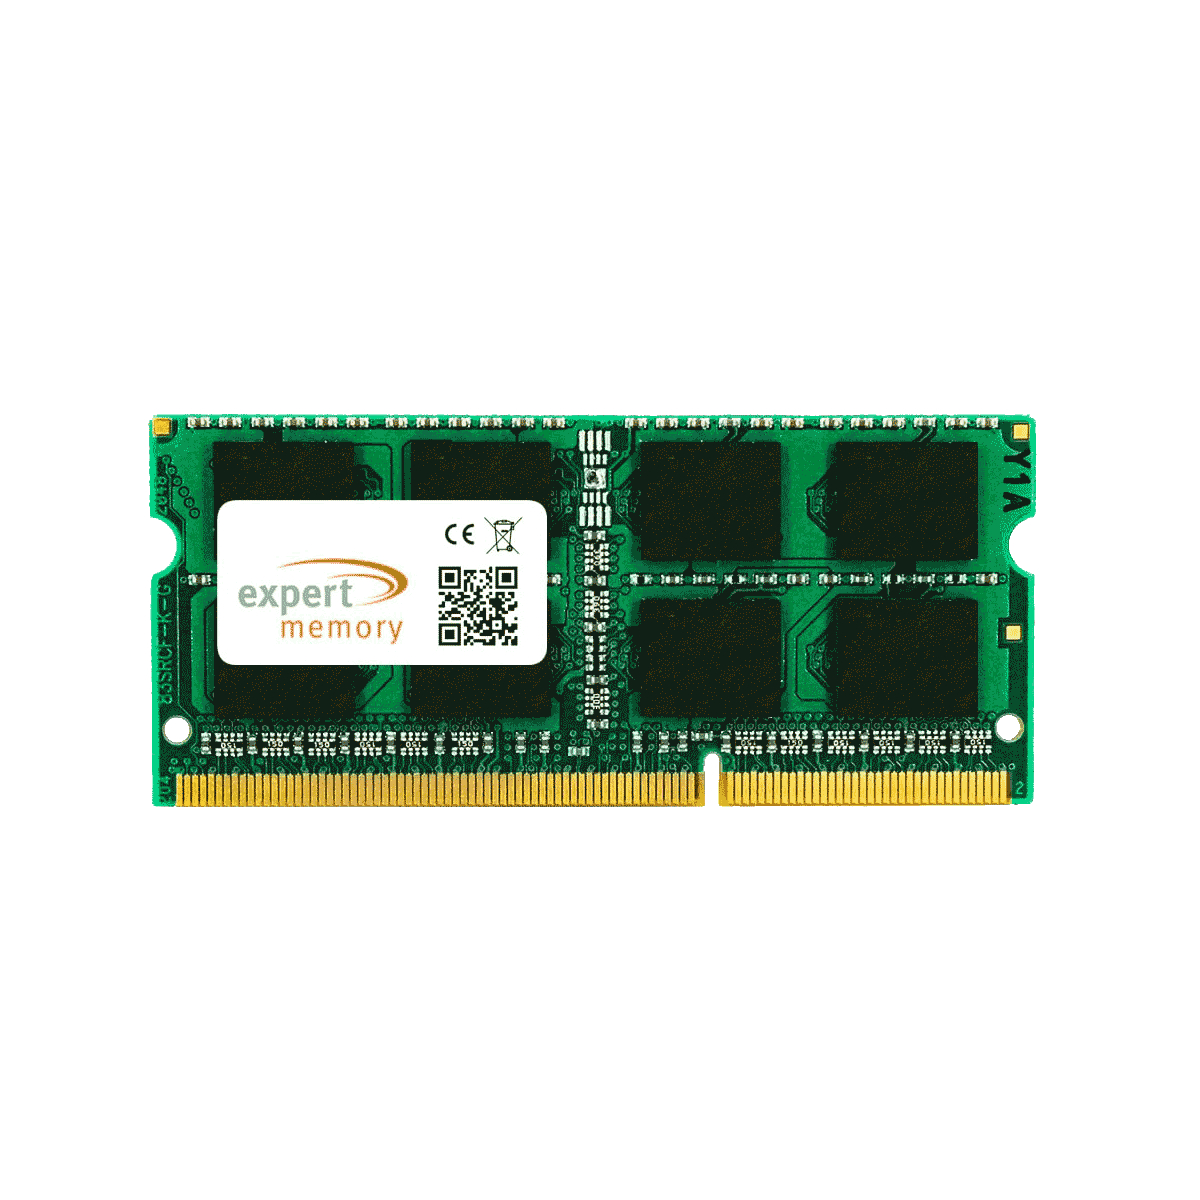 EXPERT MEMORY 8GB Asus V M6 DDR3 8 Upgrade GB PC Memory RAM